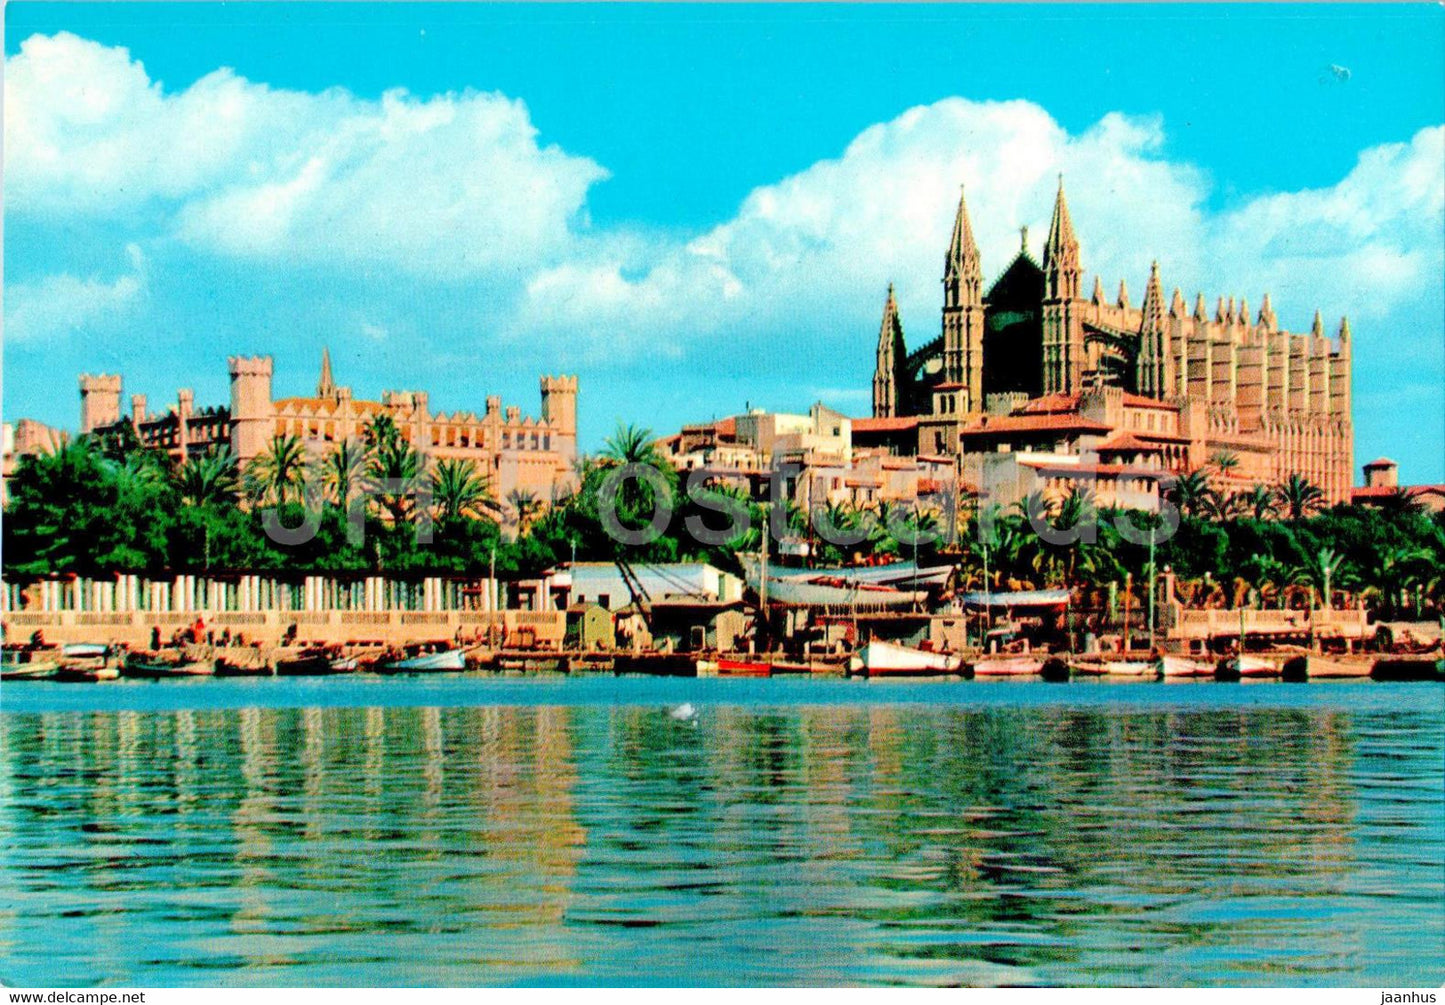 Palma - La Catedral y La Lonja - cathedral - Mallorca - 1143 - Spain - unused - JH Postcards